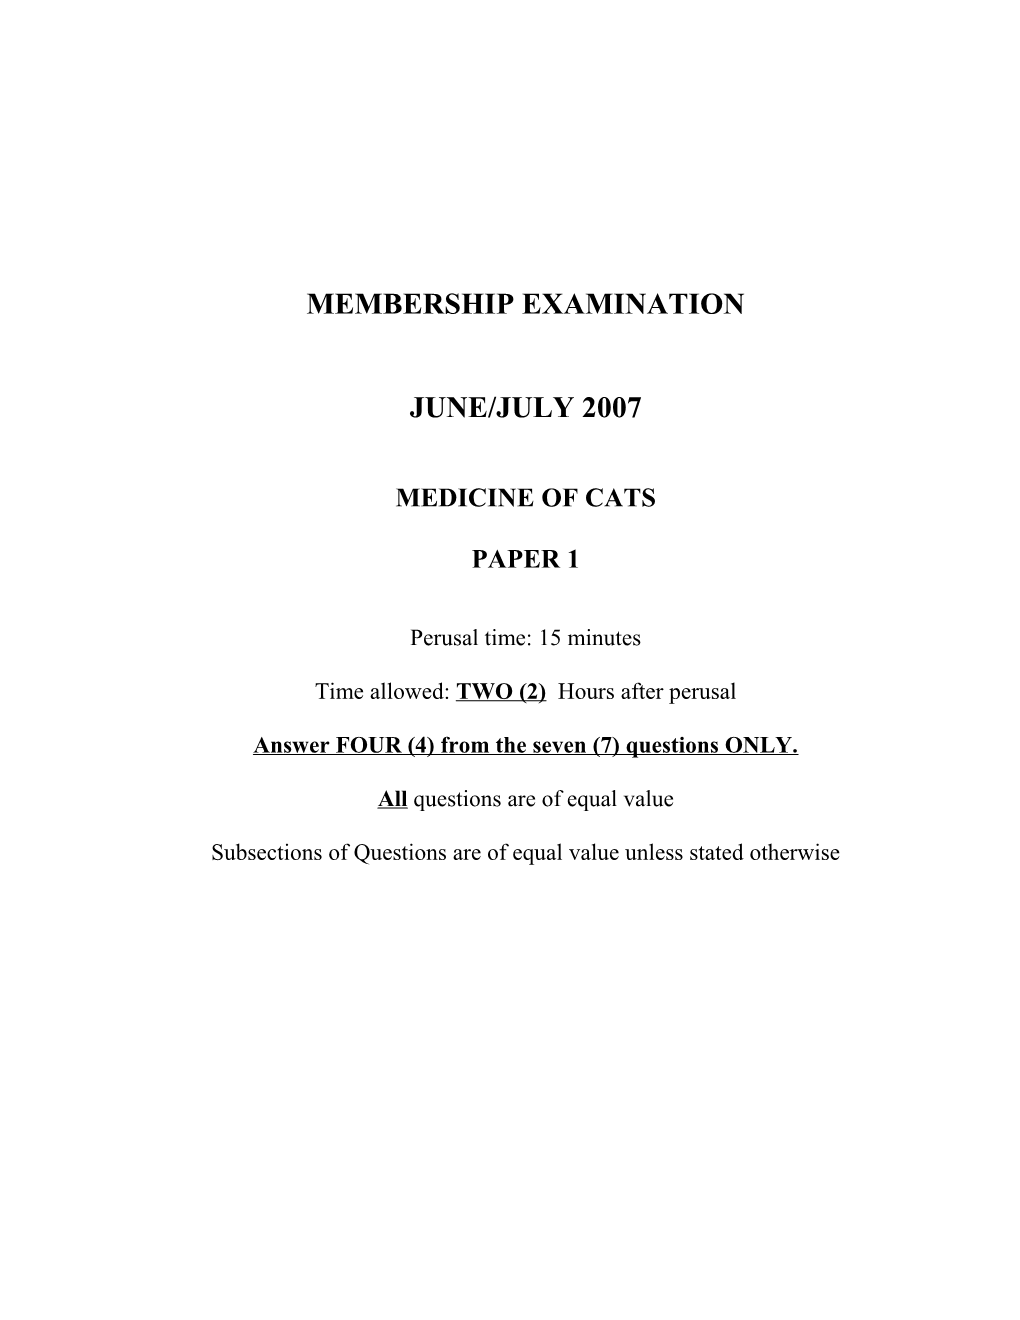 Practice Examination for Feline Medicine Membership 2004